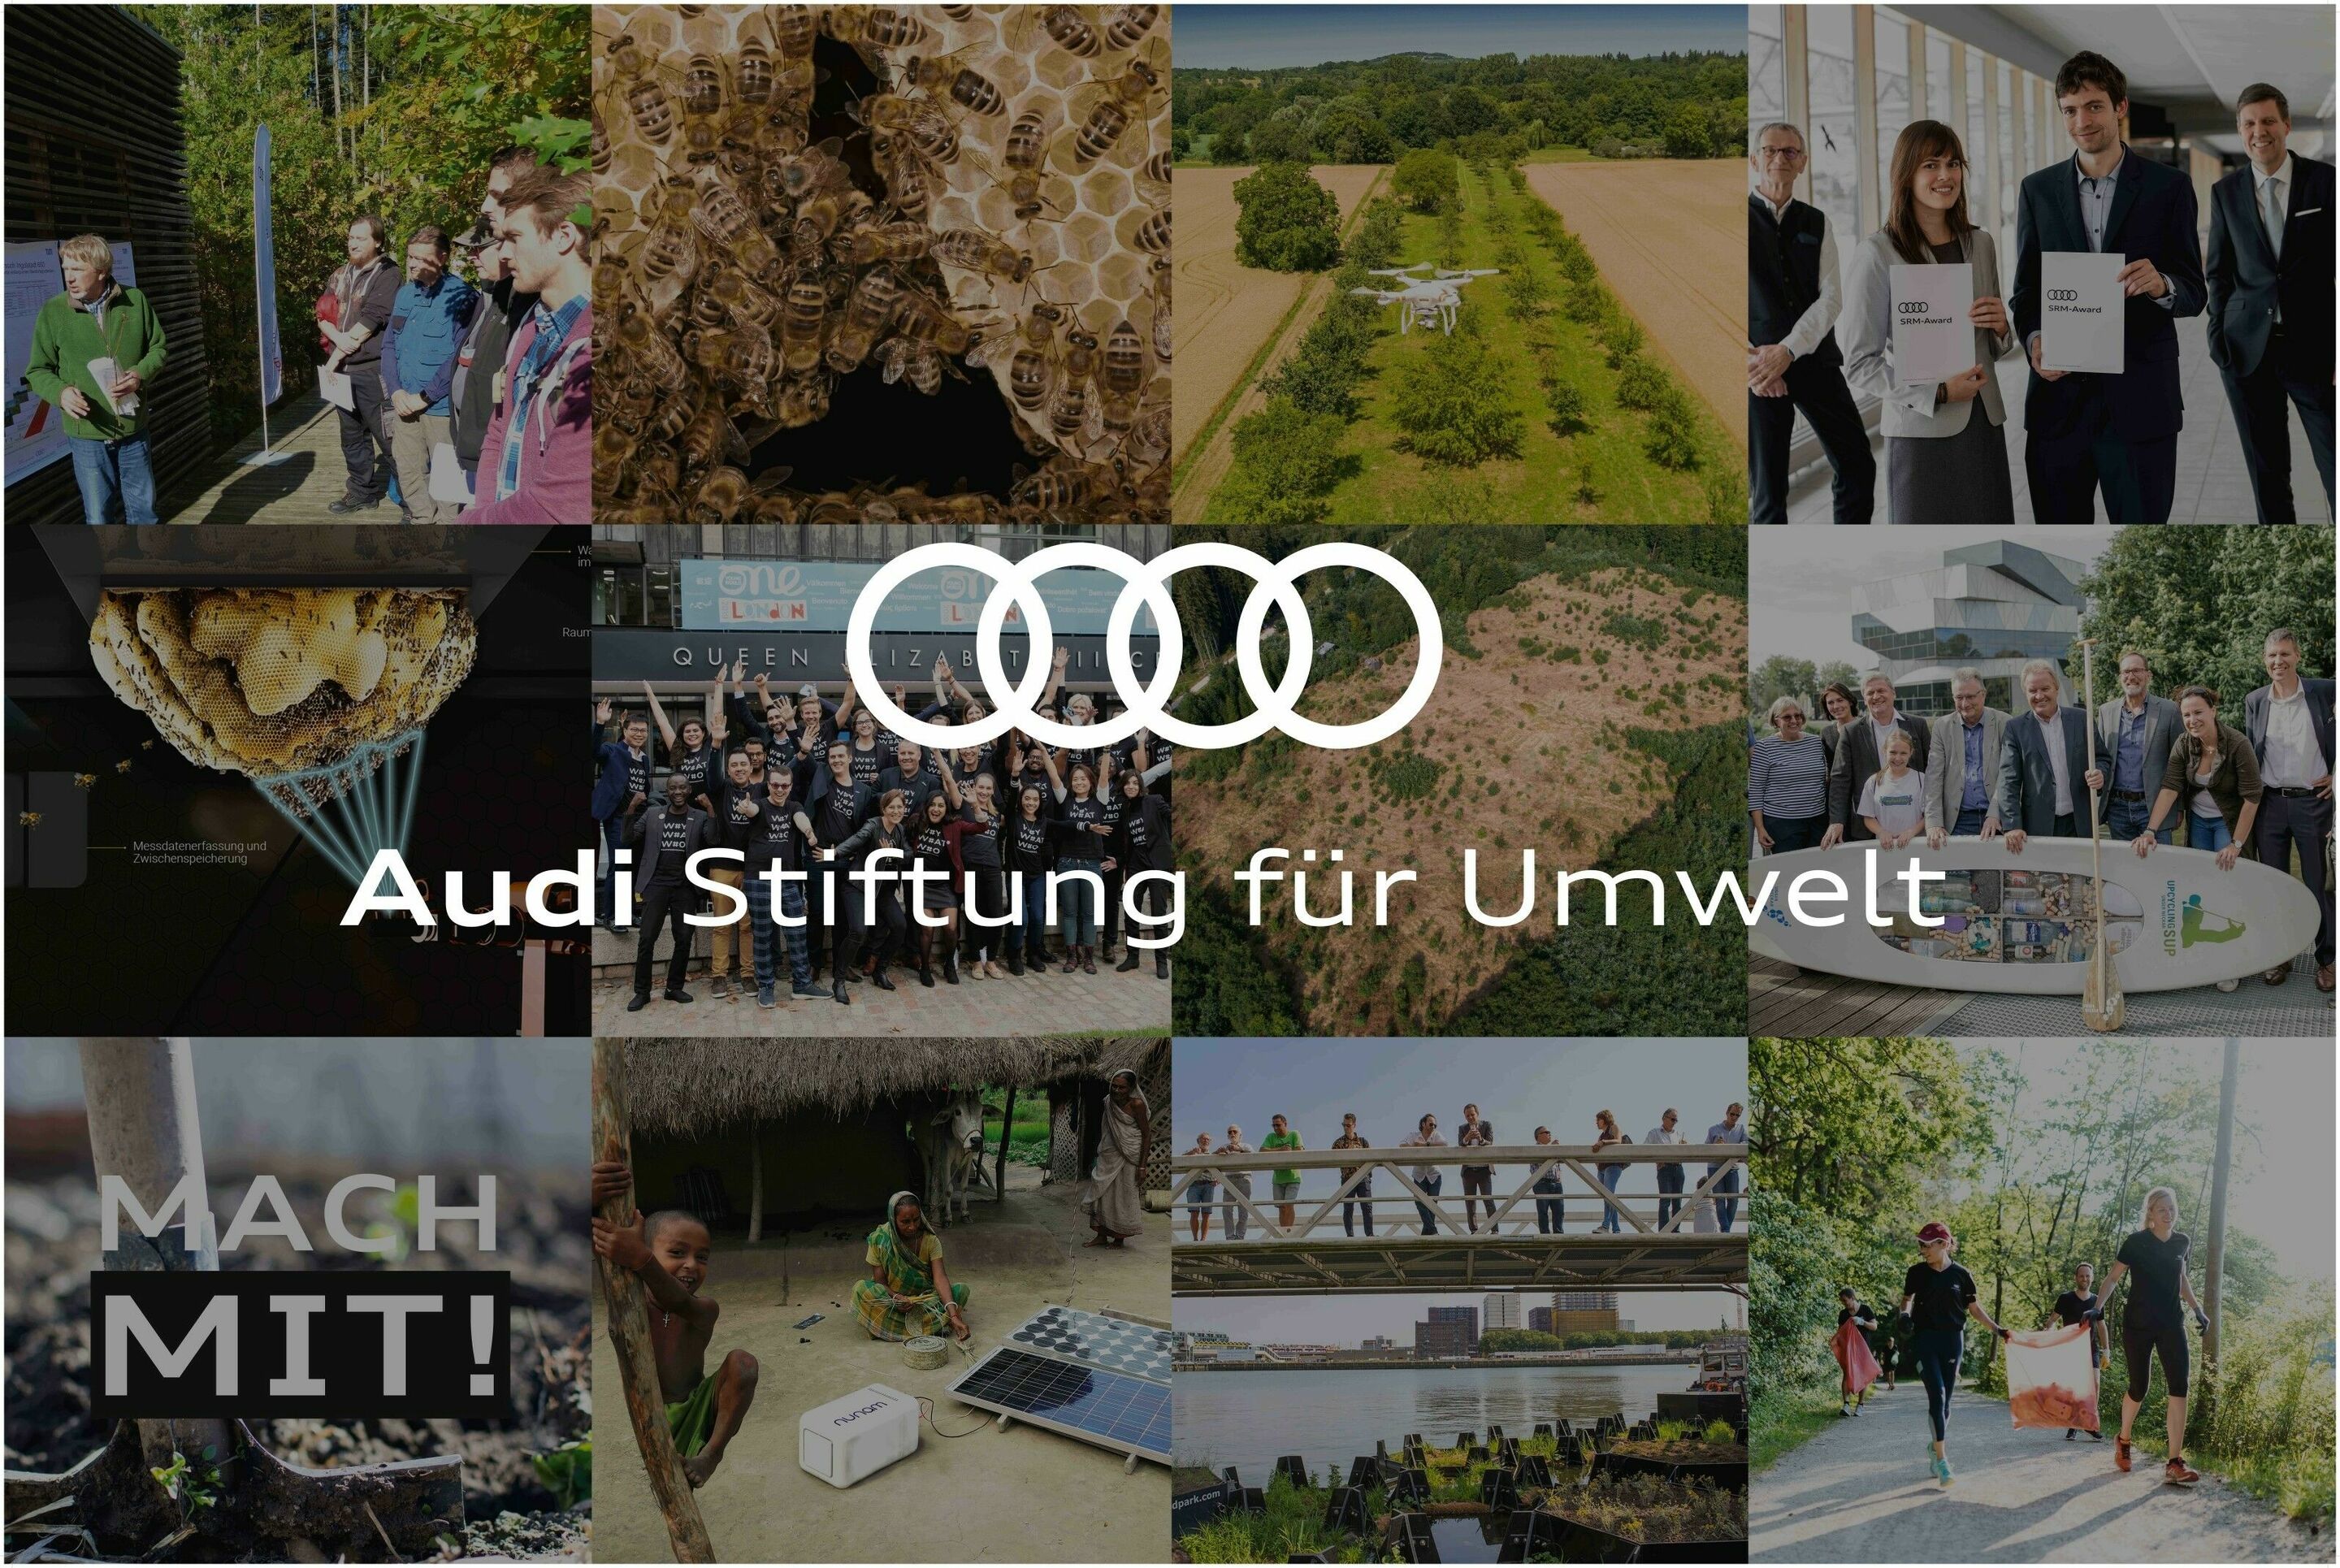 Audi Environmental Foundation